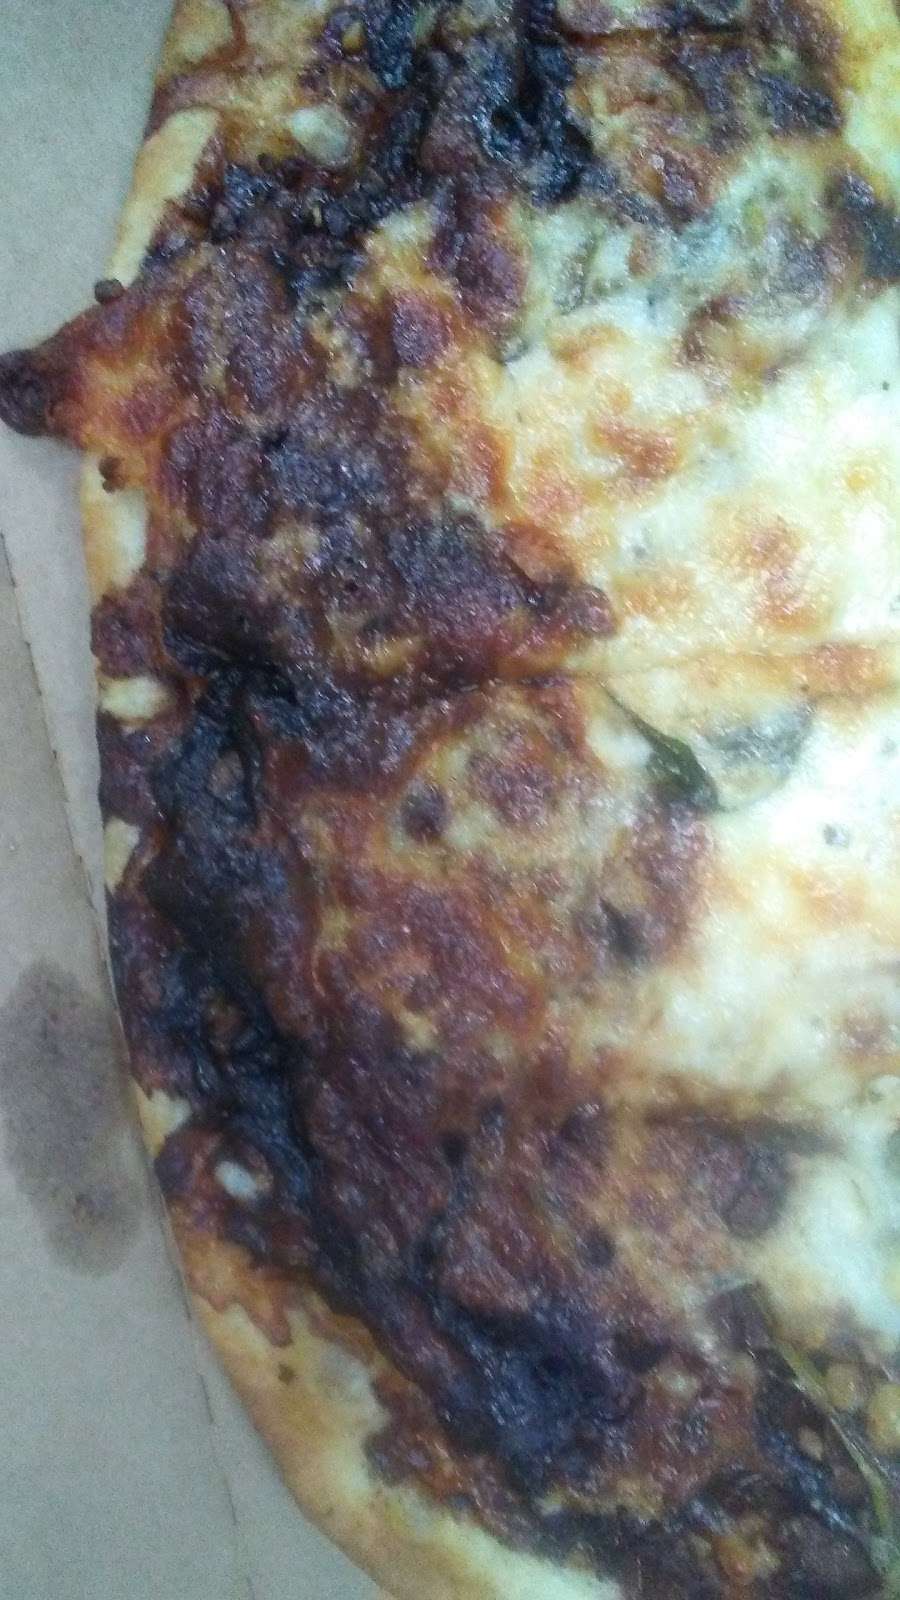 Rosatis Pizza | 310 W Indian Trail, Aurora, IL 60506, USA | Phone: (630) 892-2662